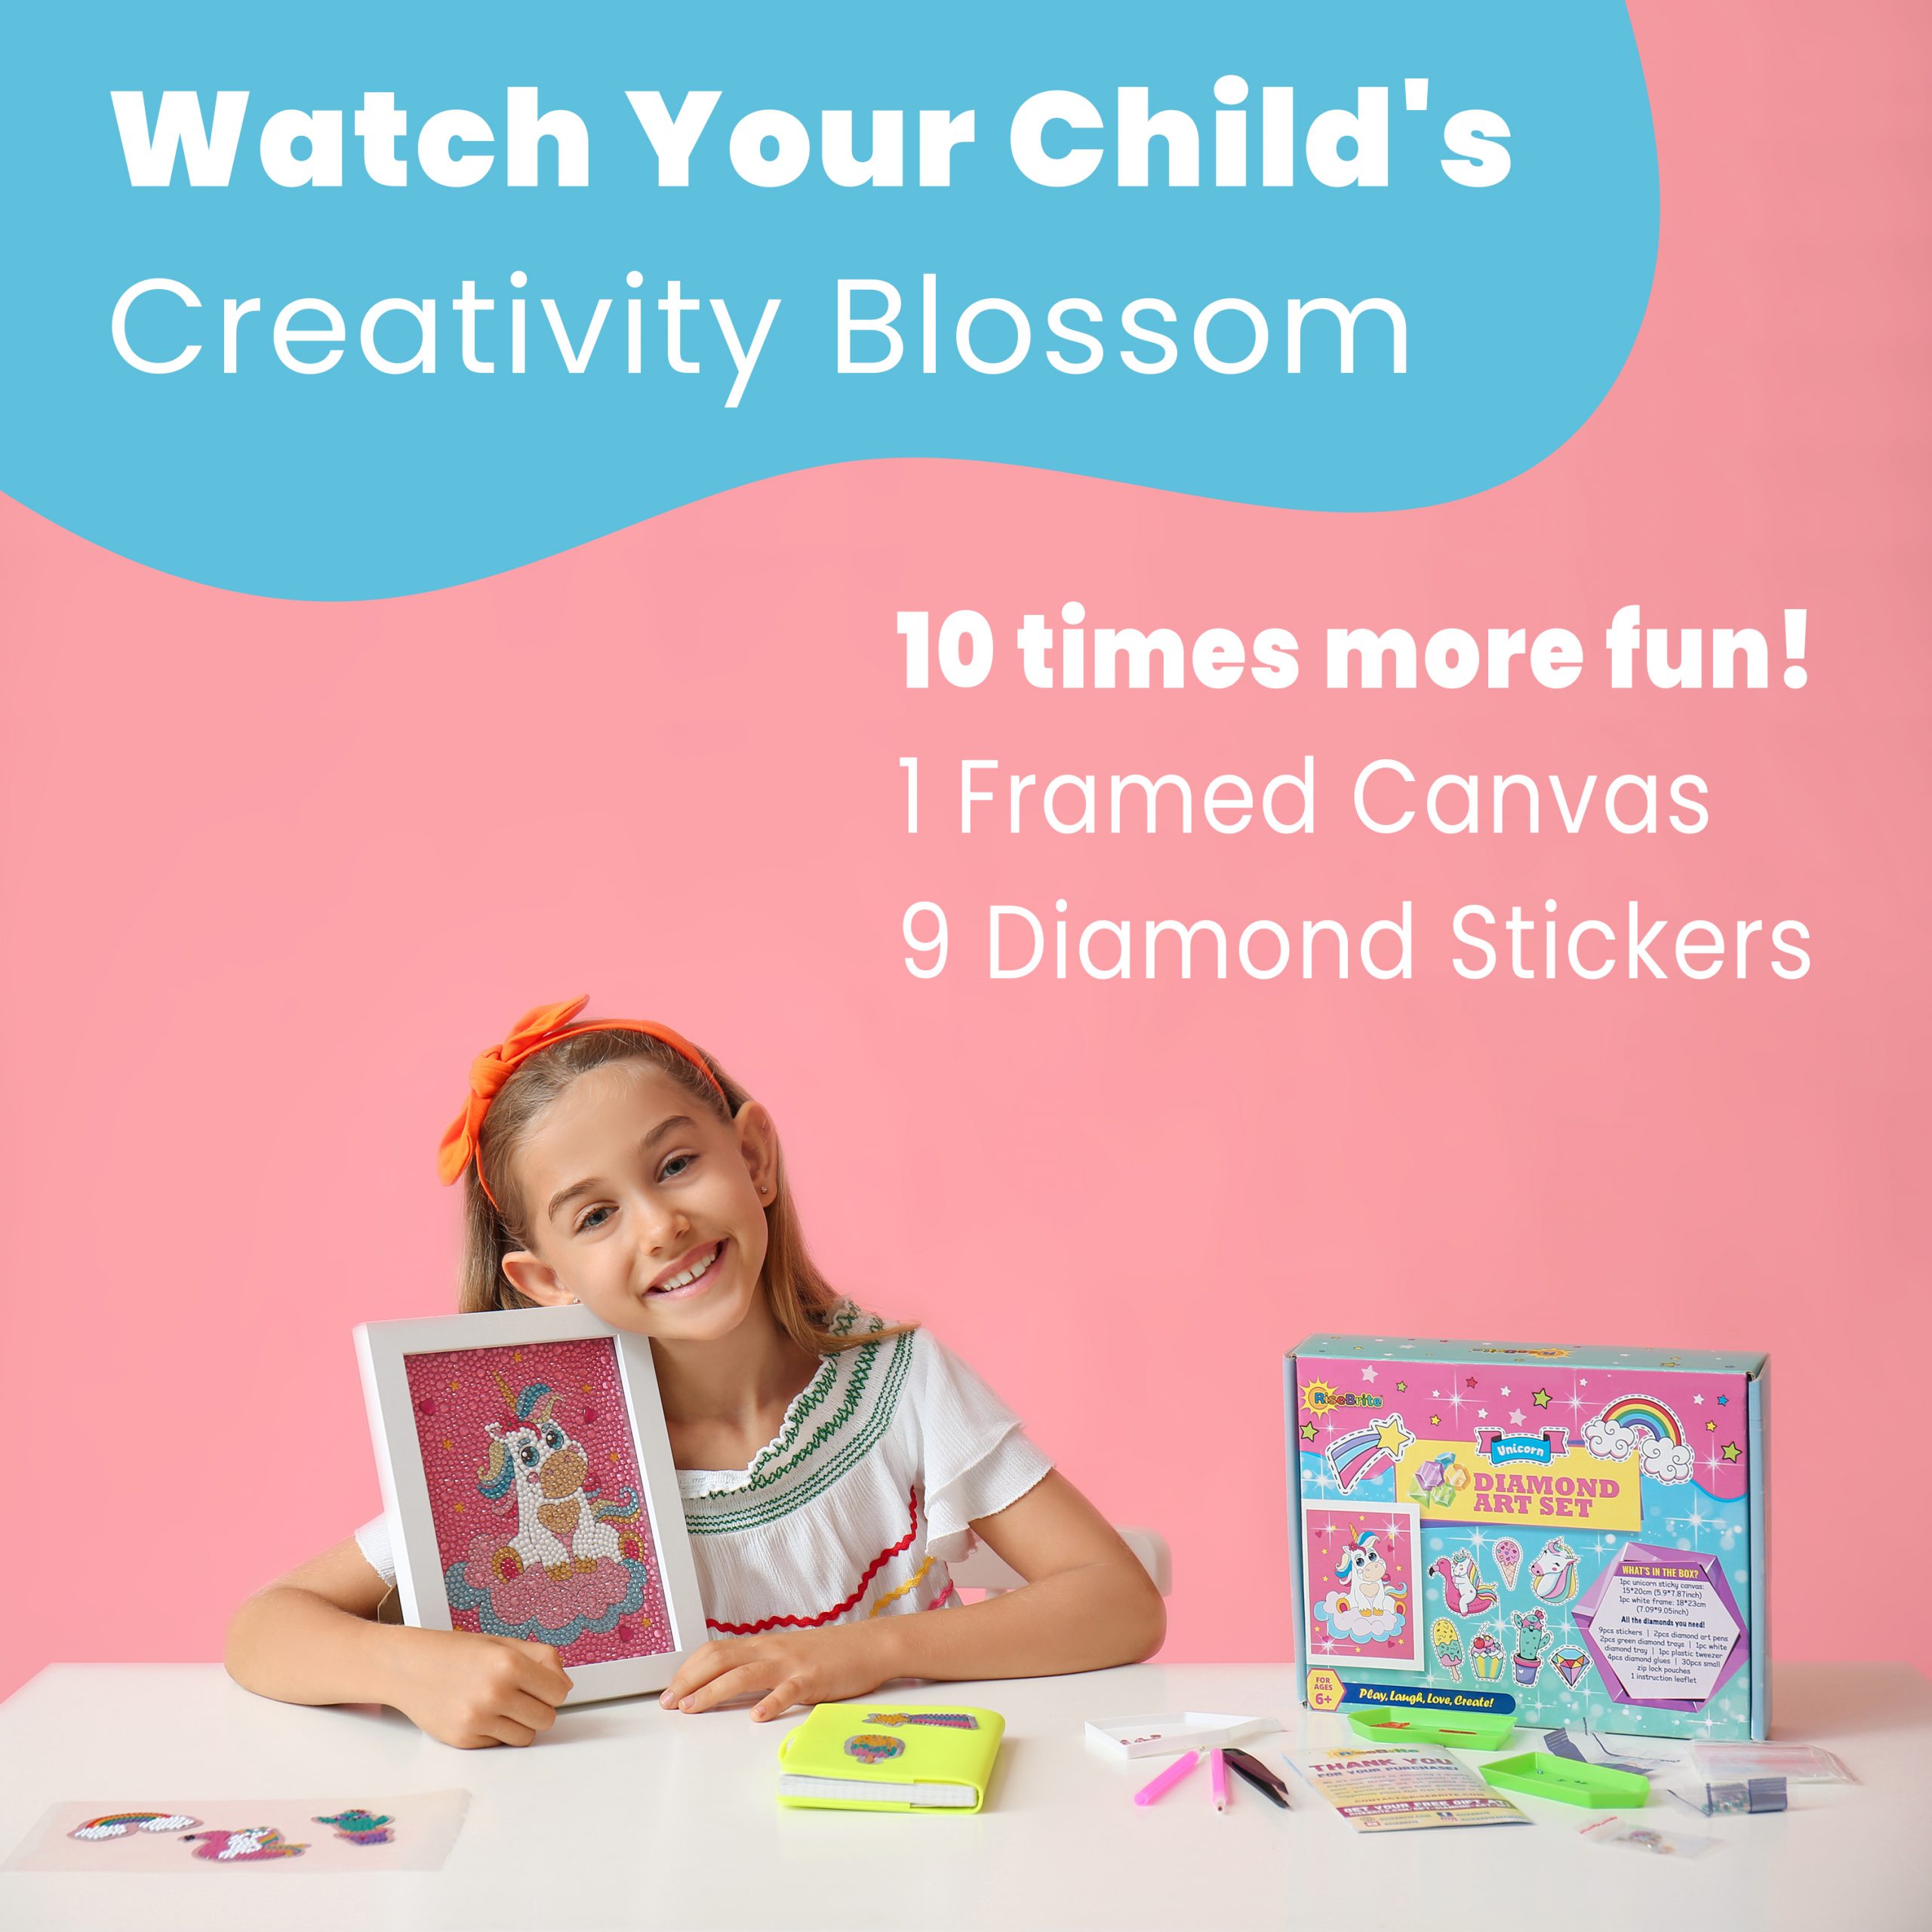 Unicorn Diamond Painting Kit for Kids - RiseBrite